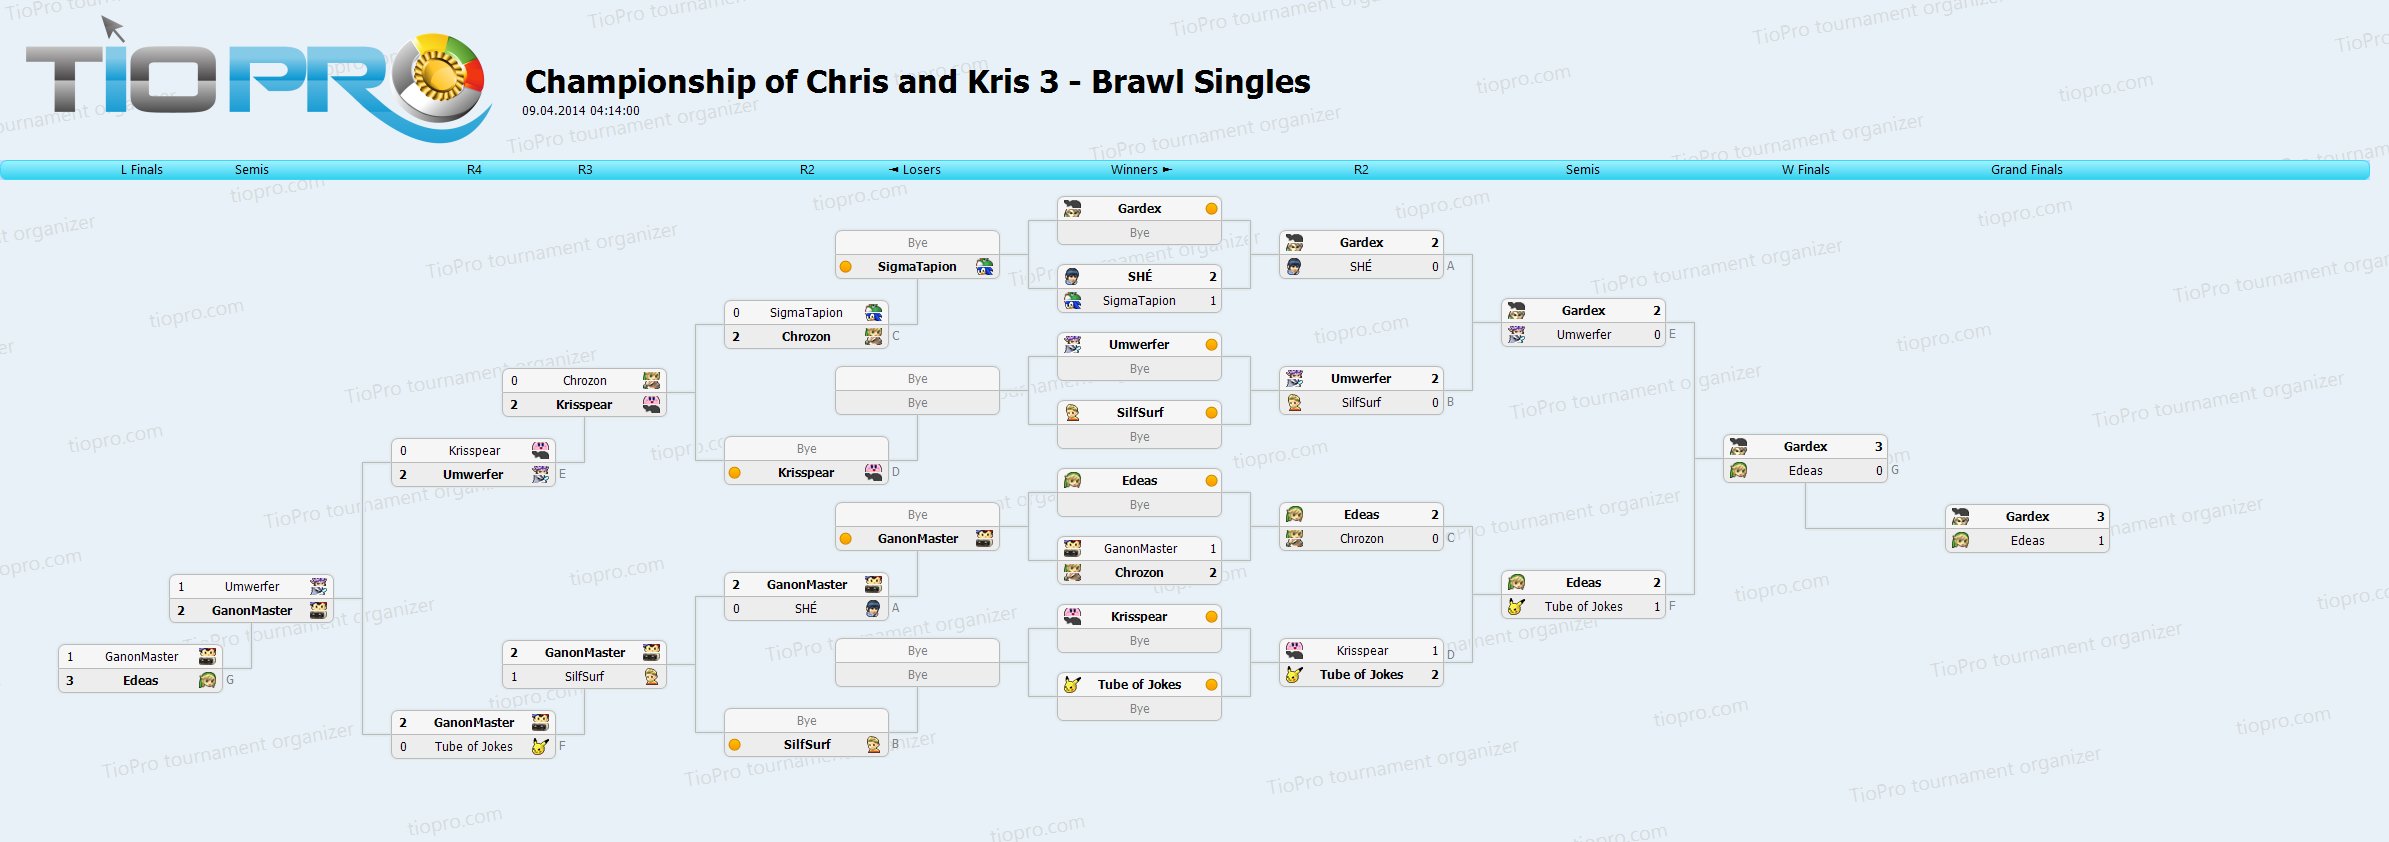 Championship of Chris and Kris 3 - Brawl Singles